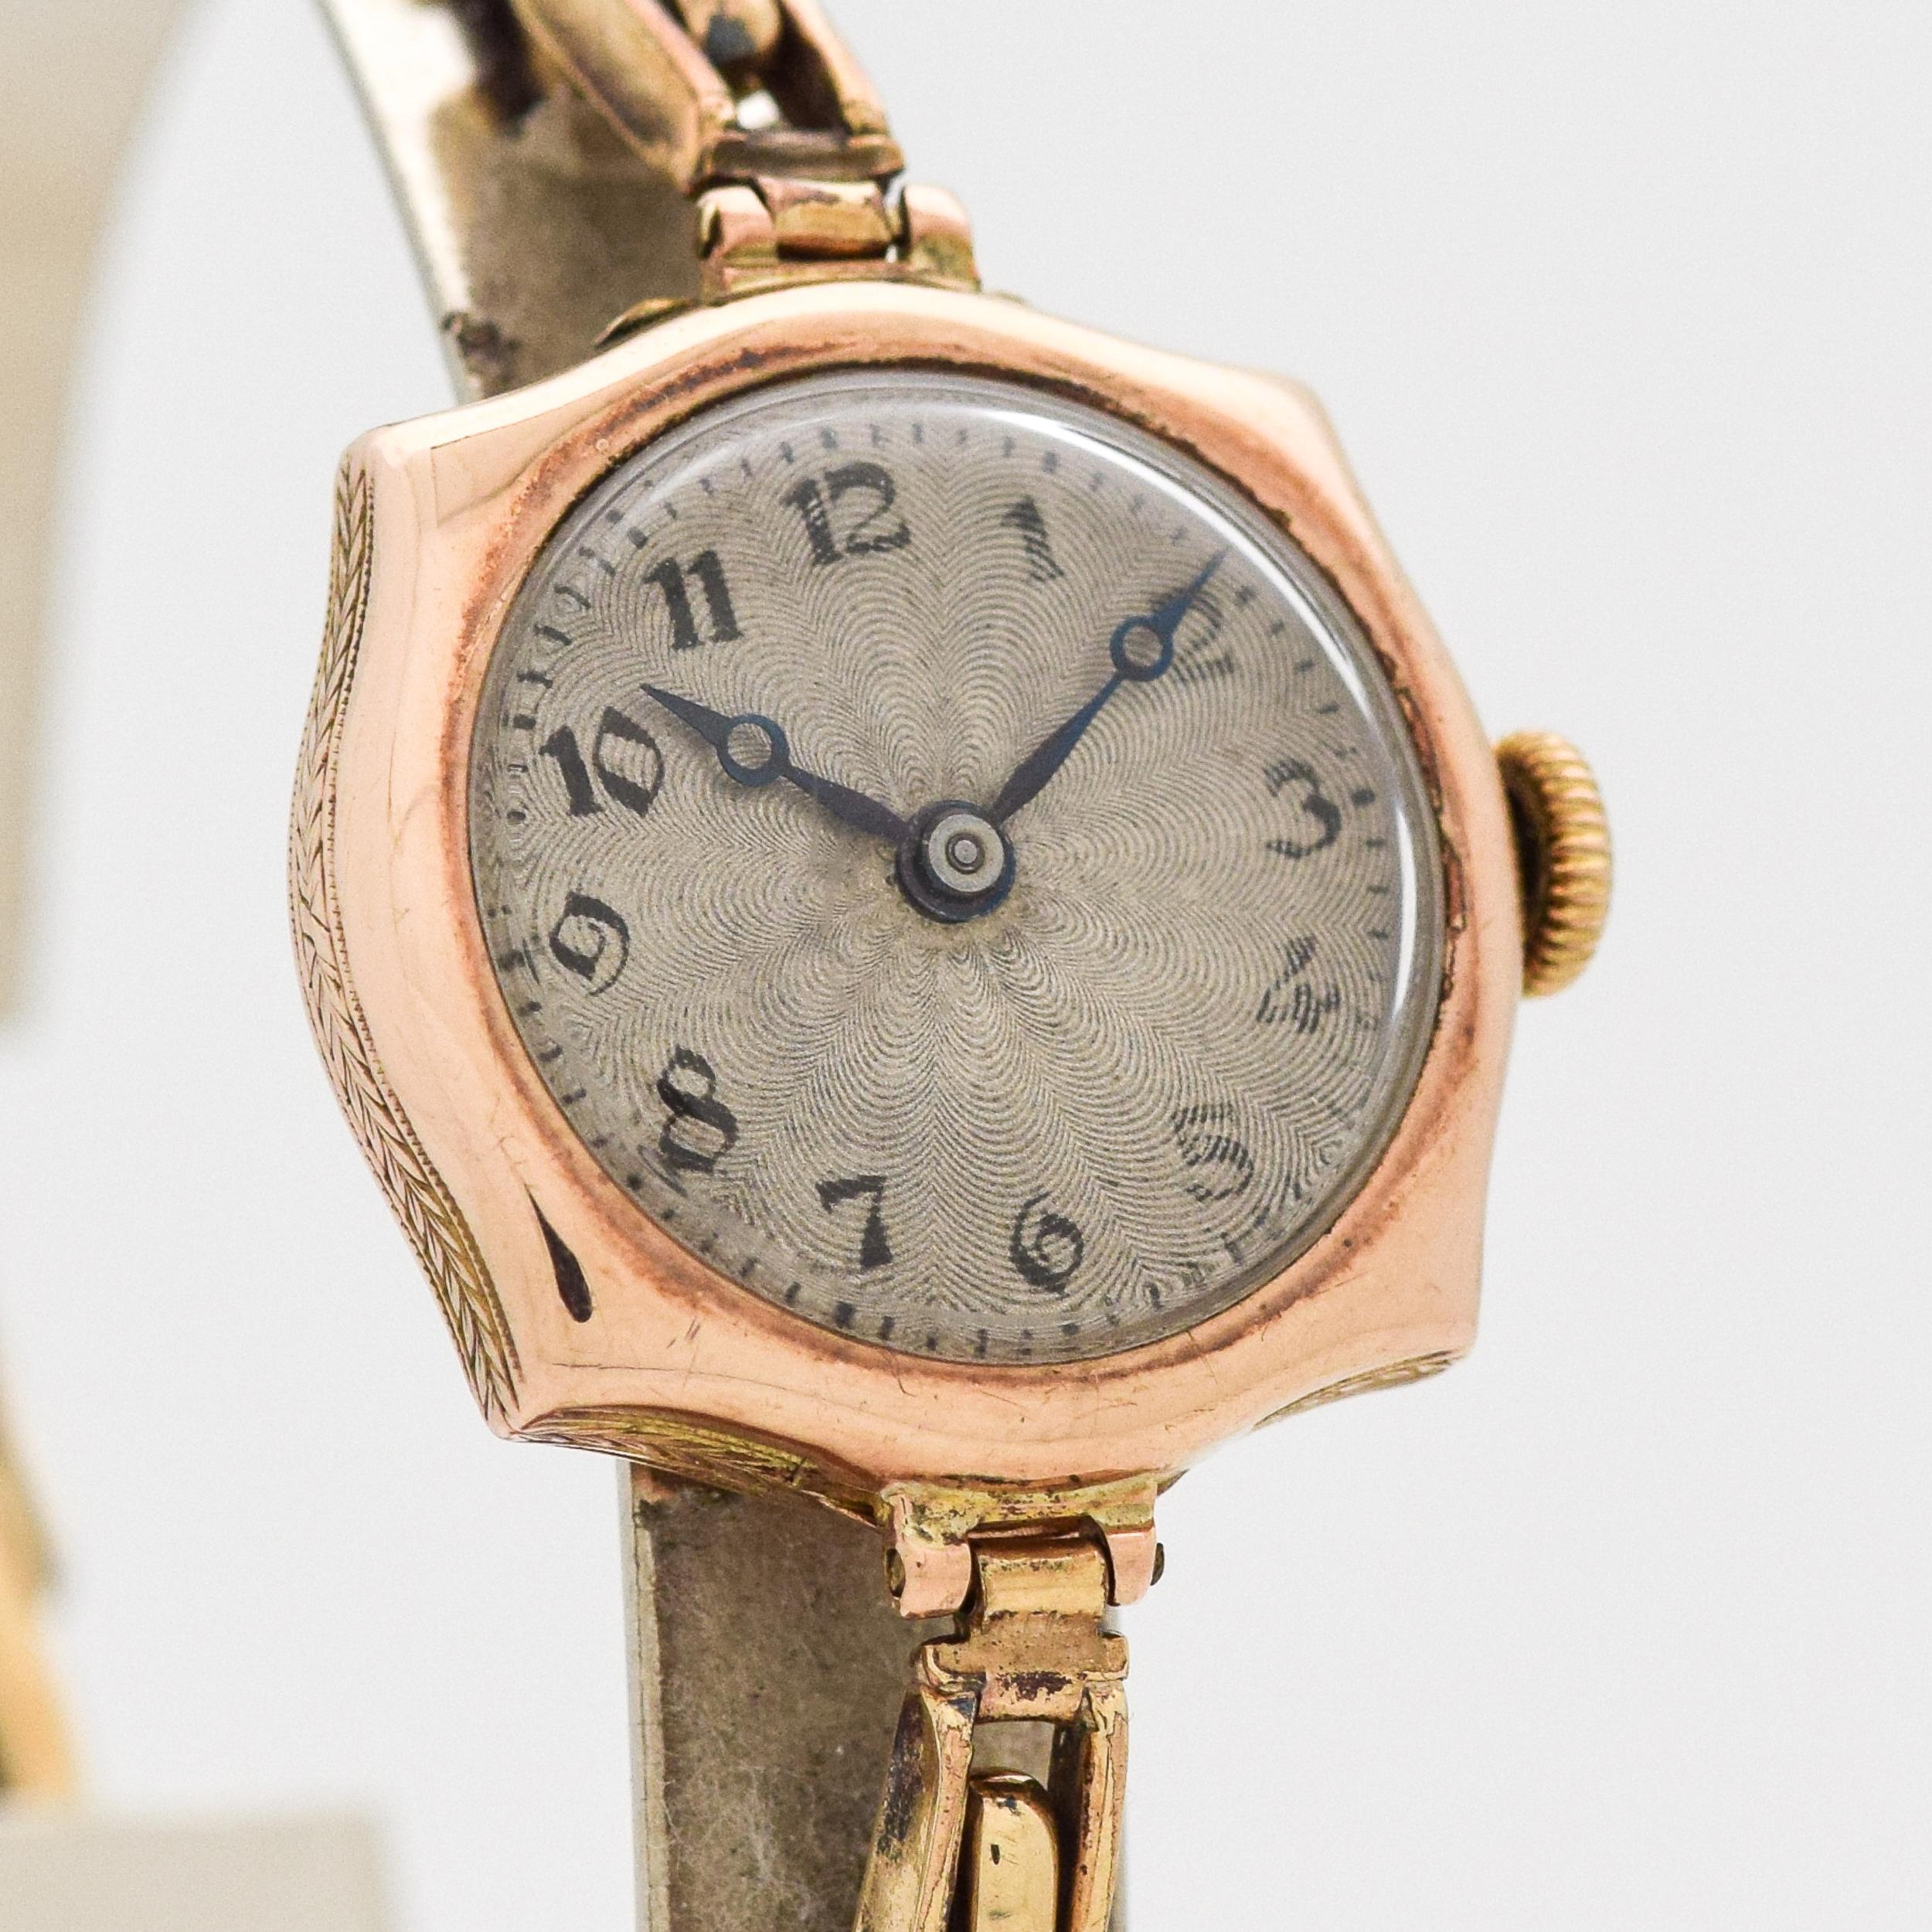 1910's Vintage Rolex Ladies 9k Light Rose Gold Art Deco Design watch with Original Sunburst Silver Dial with Black Breguet Arabic Numbers and Original Spring Stretch Bracelet.  23mm x 27mm lug to lug (0.91 in. x 1.06 in.) - 15 jewel, manual caliber